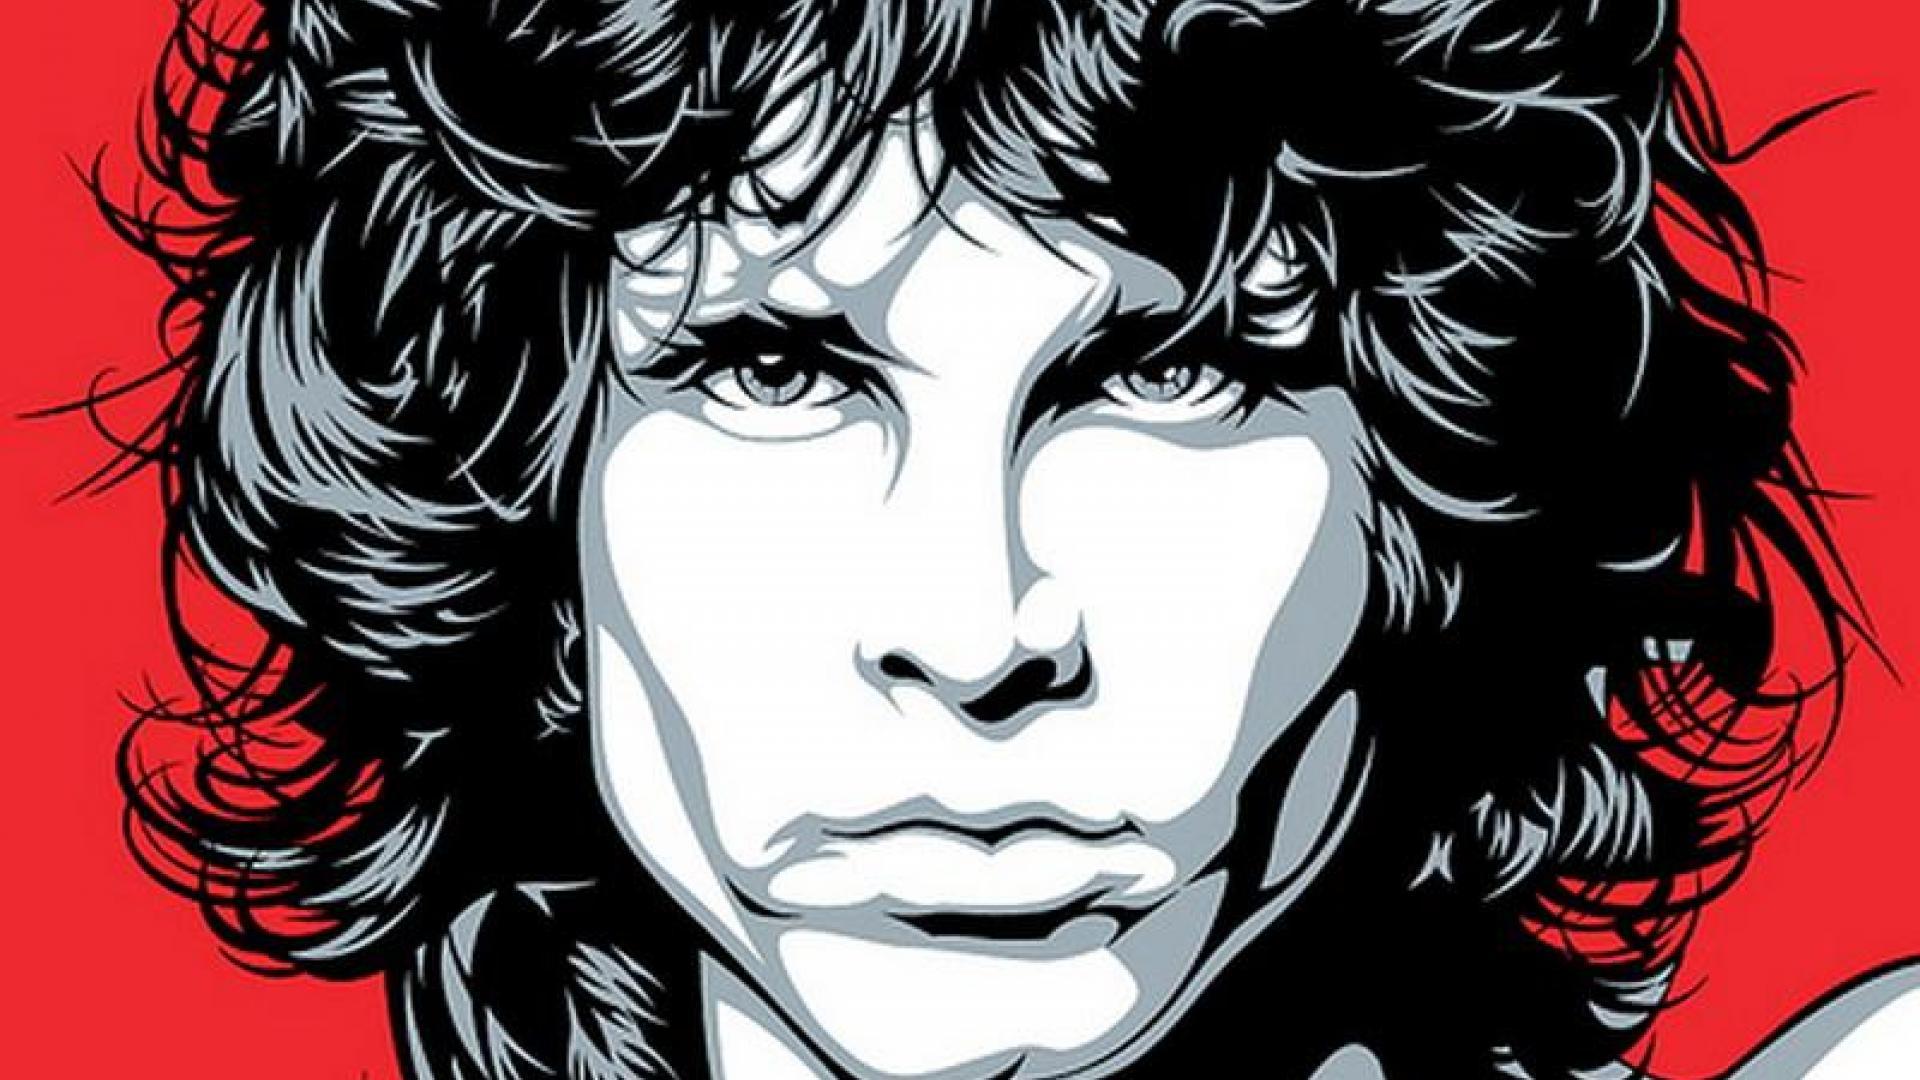 Jim Morrison Wallpaper by Colin Fichtner on FL. Celebrities HDQ